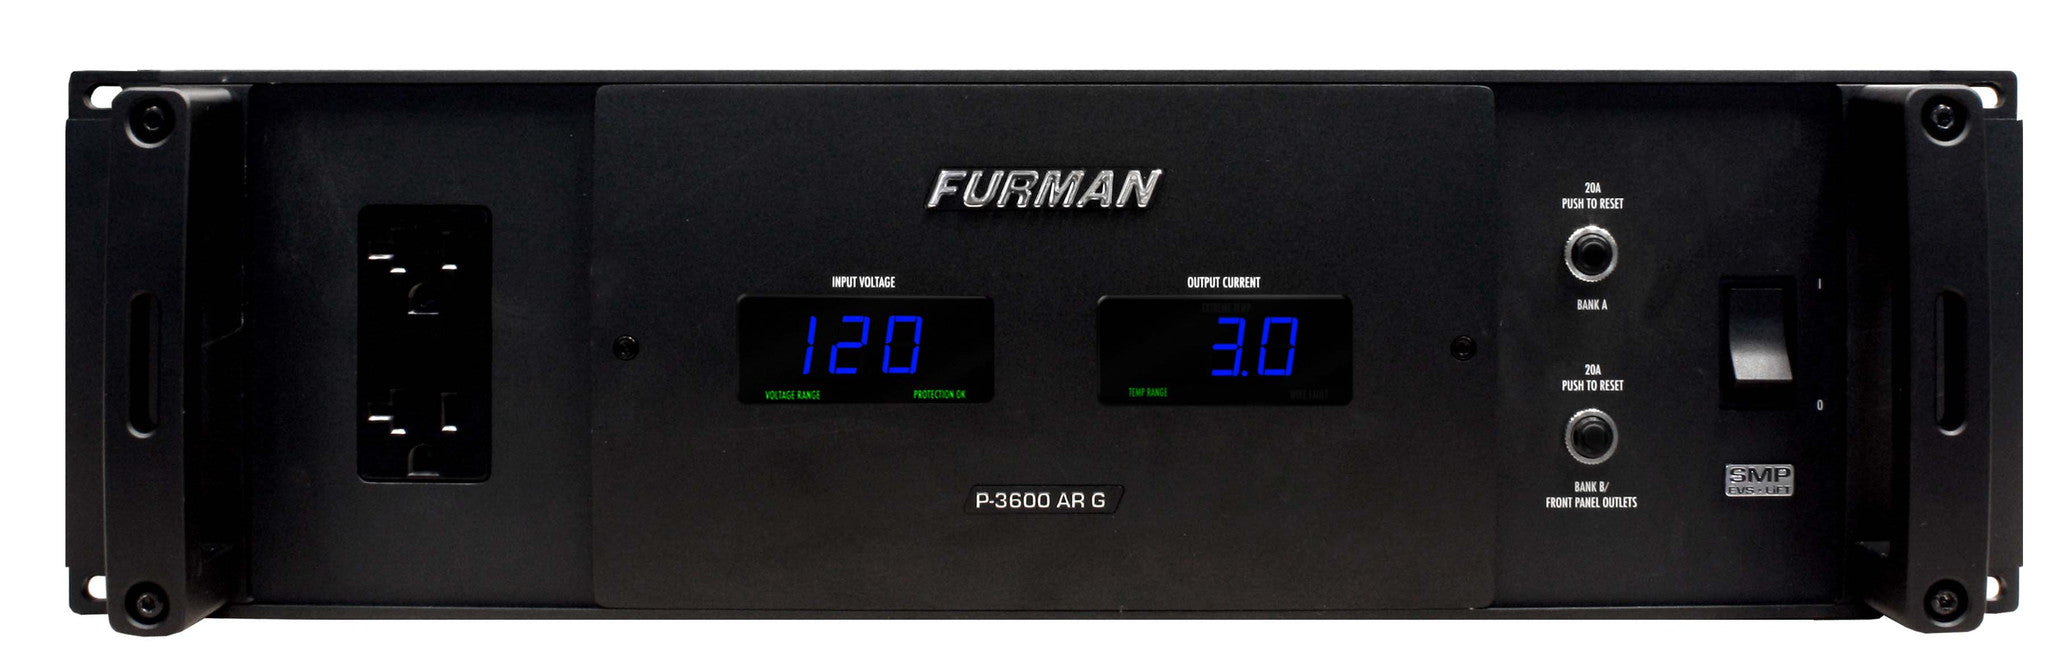 Accessories - Furman - Furman Sound P-3600 AR G - Professional Audio Design, Inc